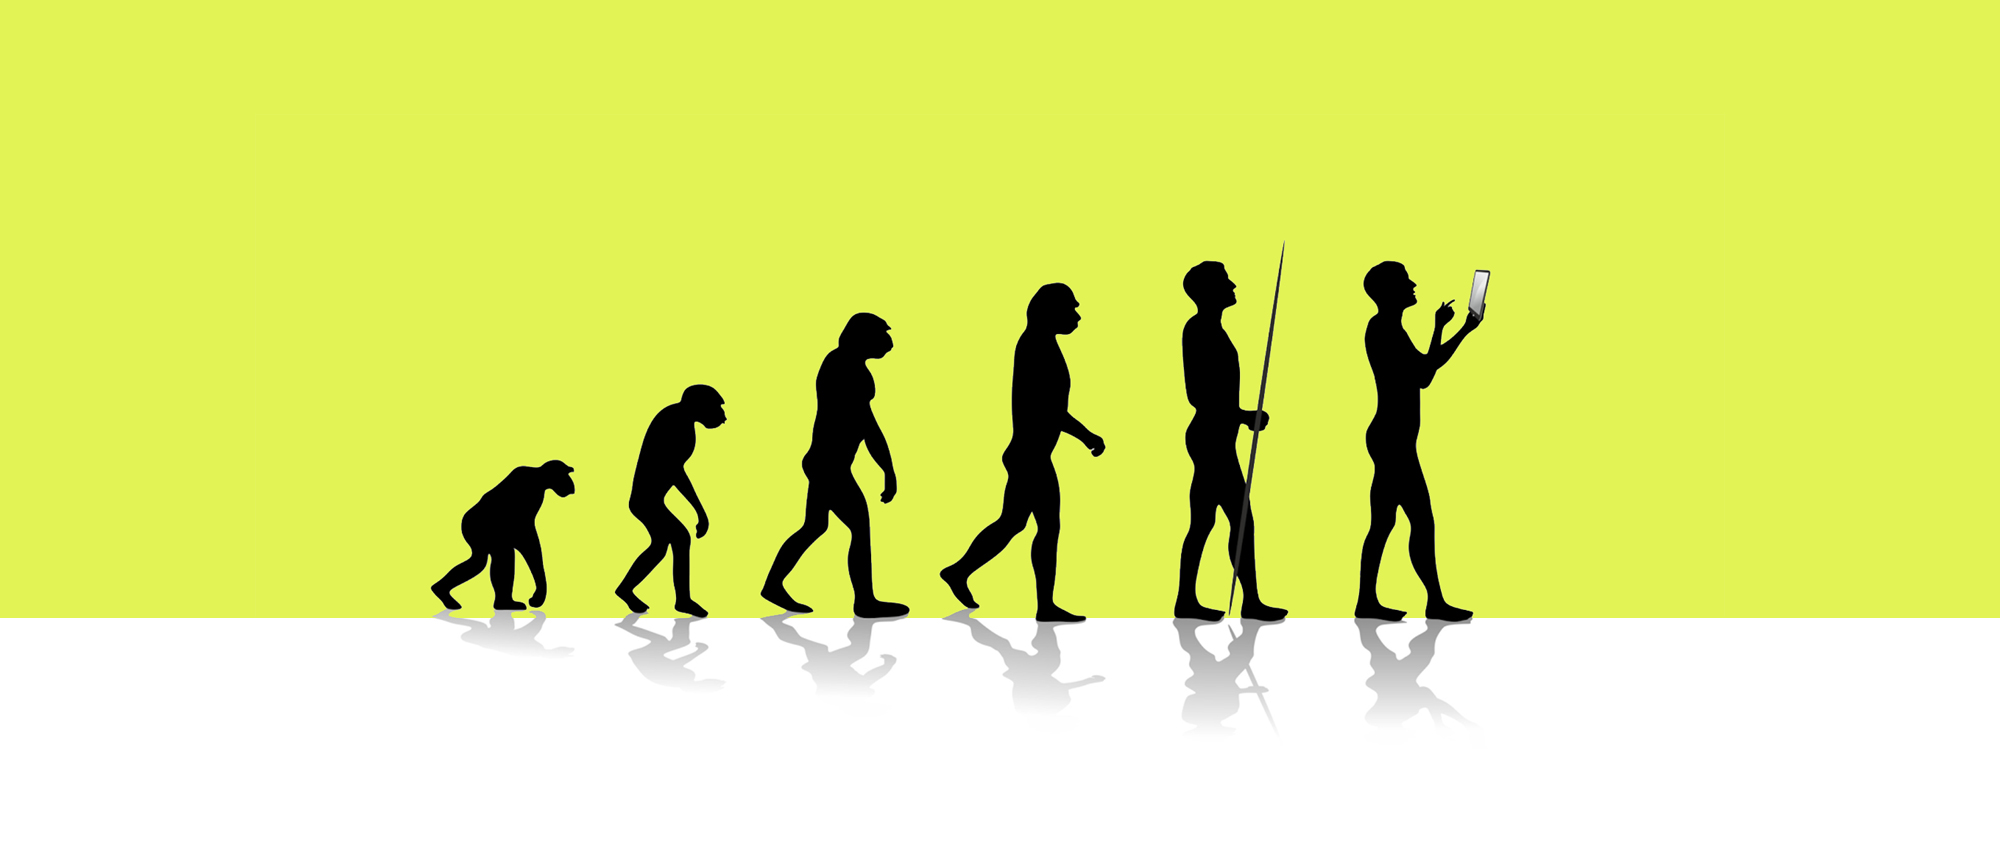 evolution of man to iPad